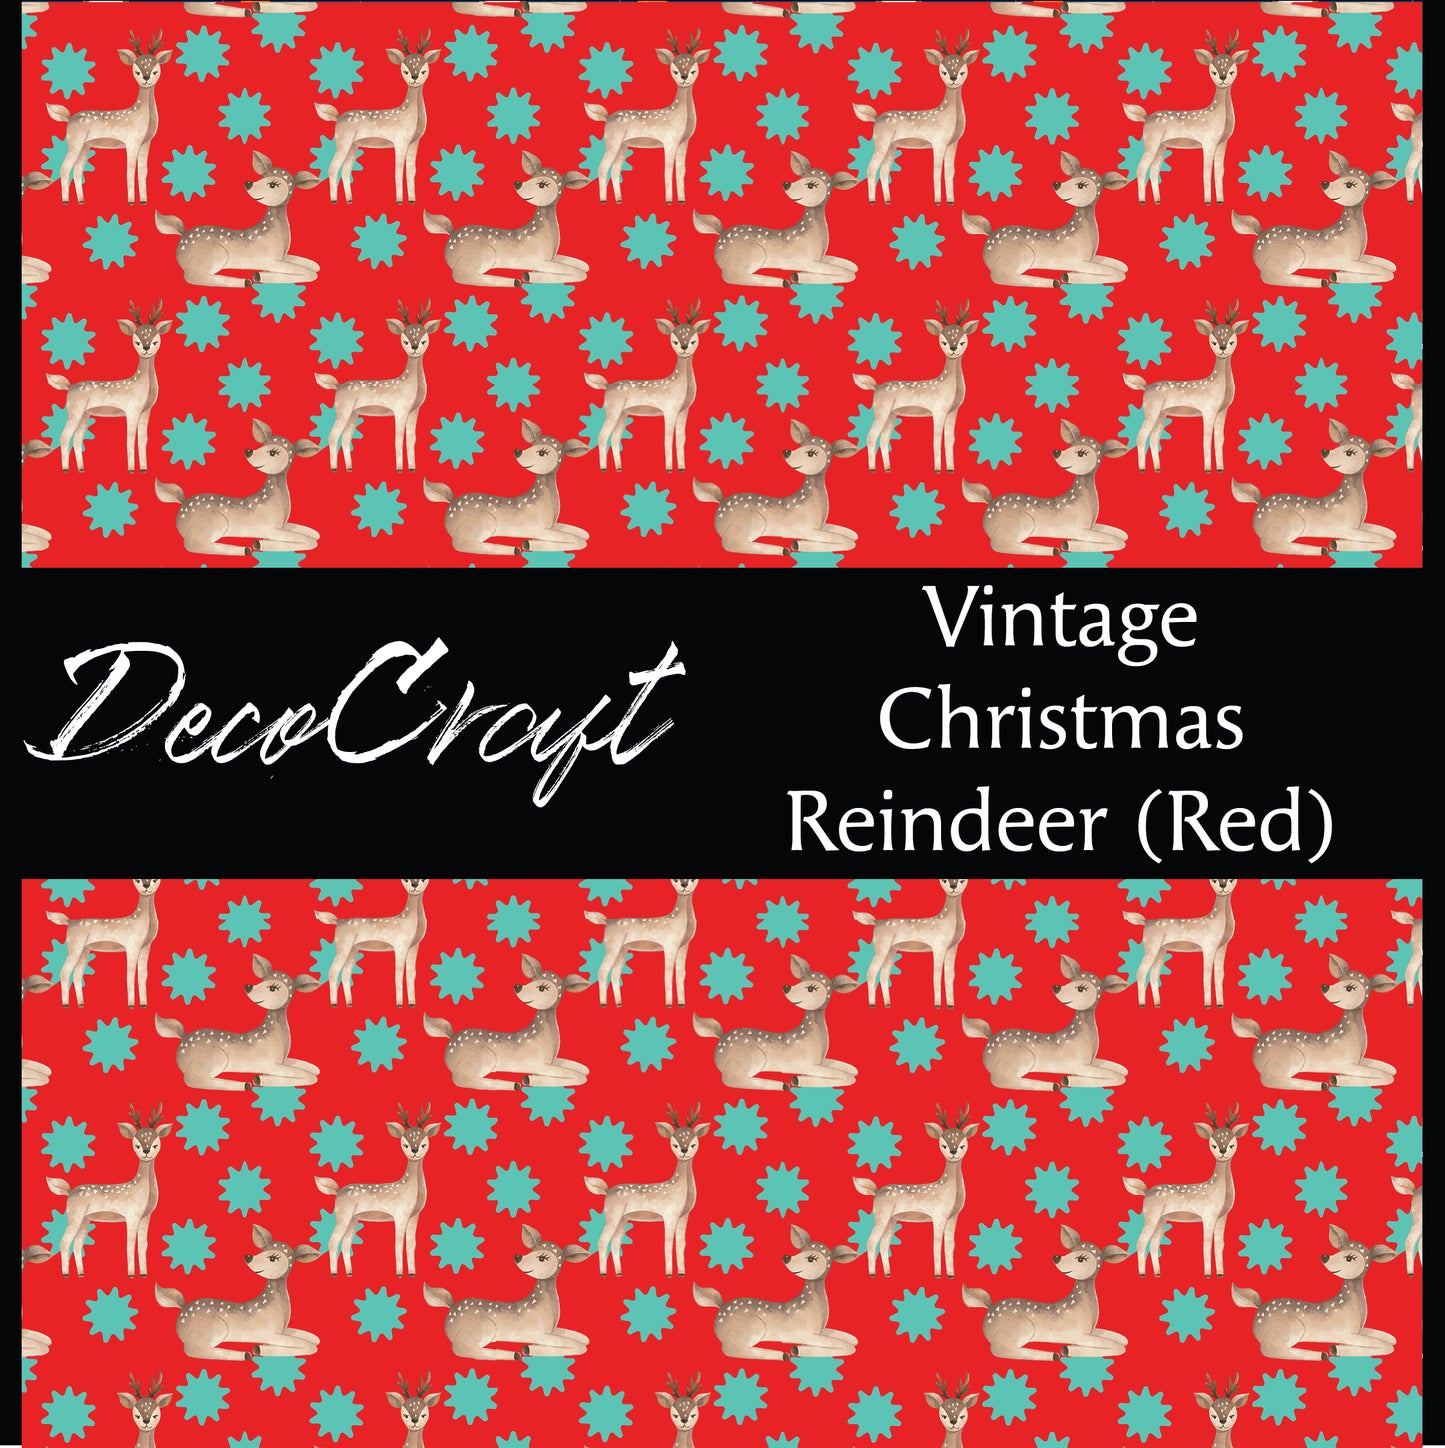 DecoCraft Christmas - Vintage Christmas - Reindeer Red